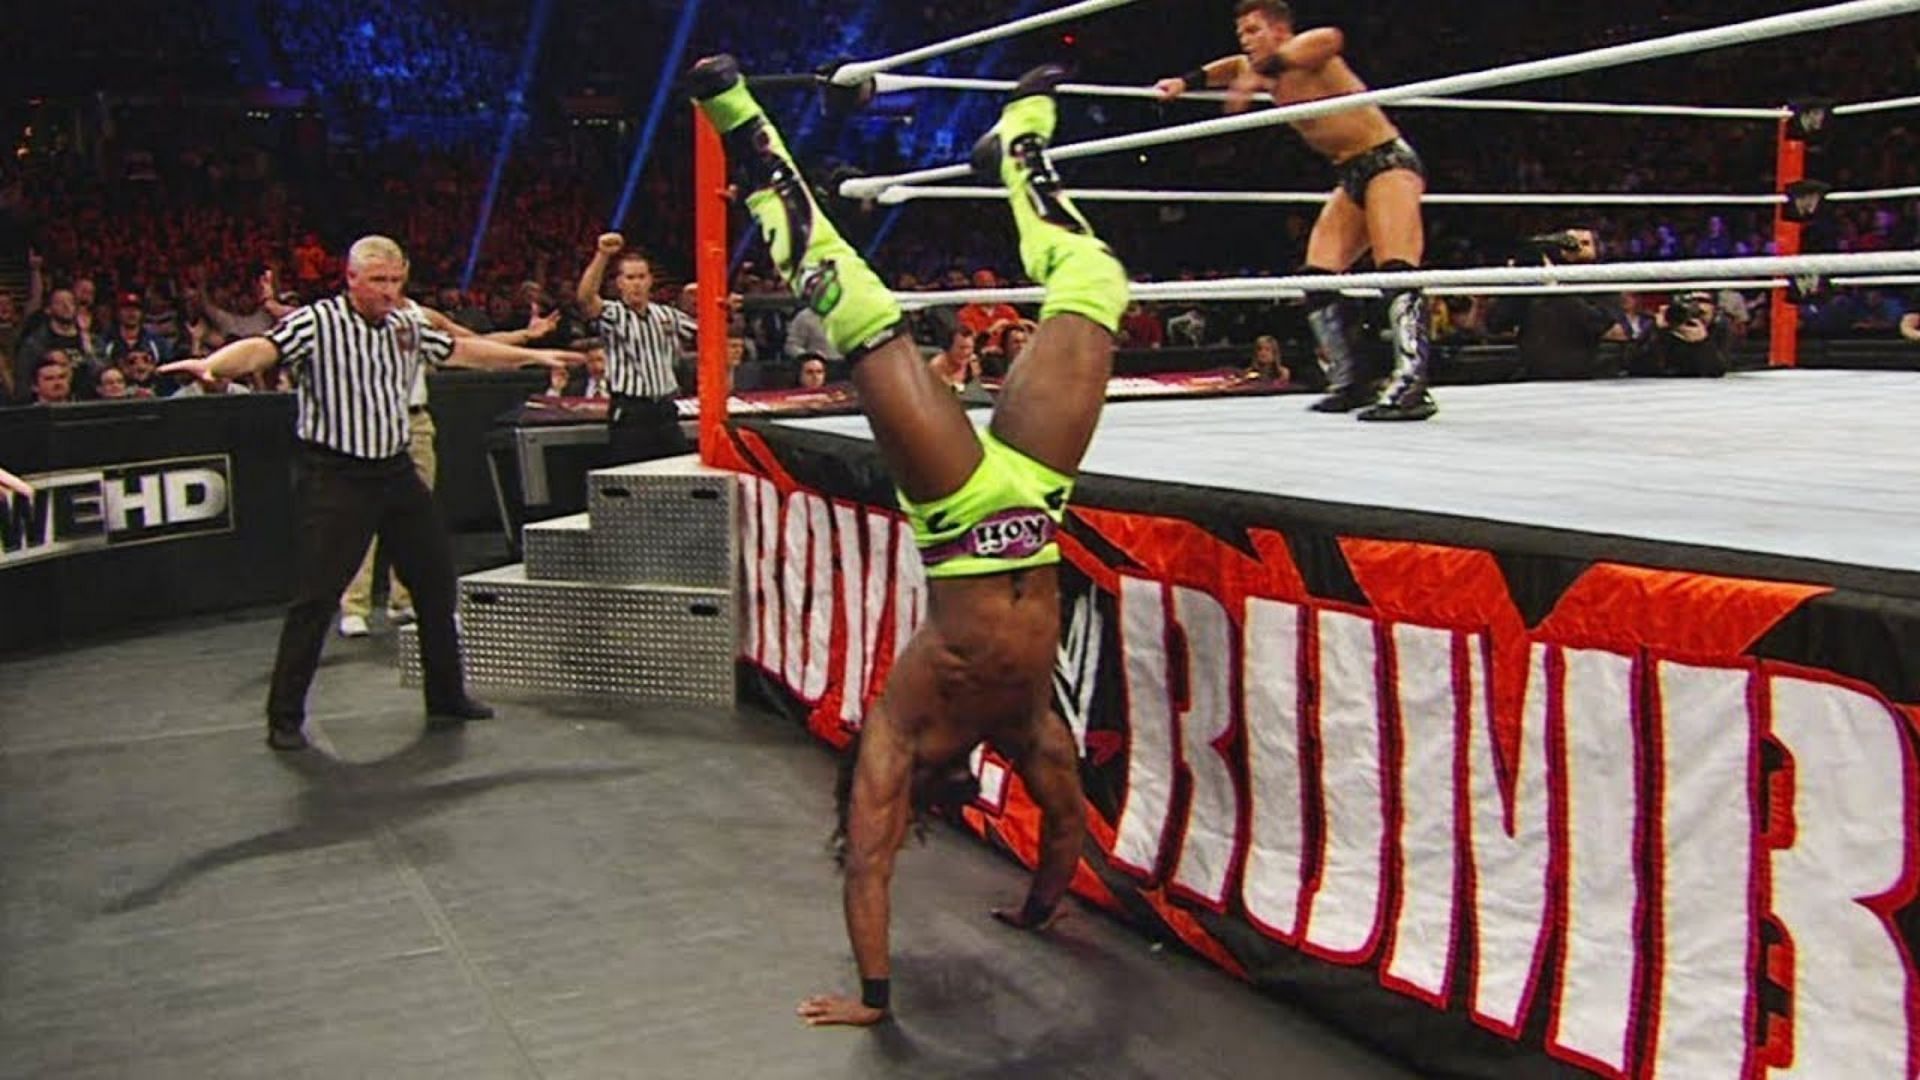 Kofi Kingston is often involved in memorable Royal Rumble moments.